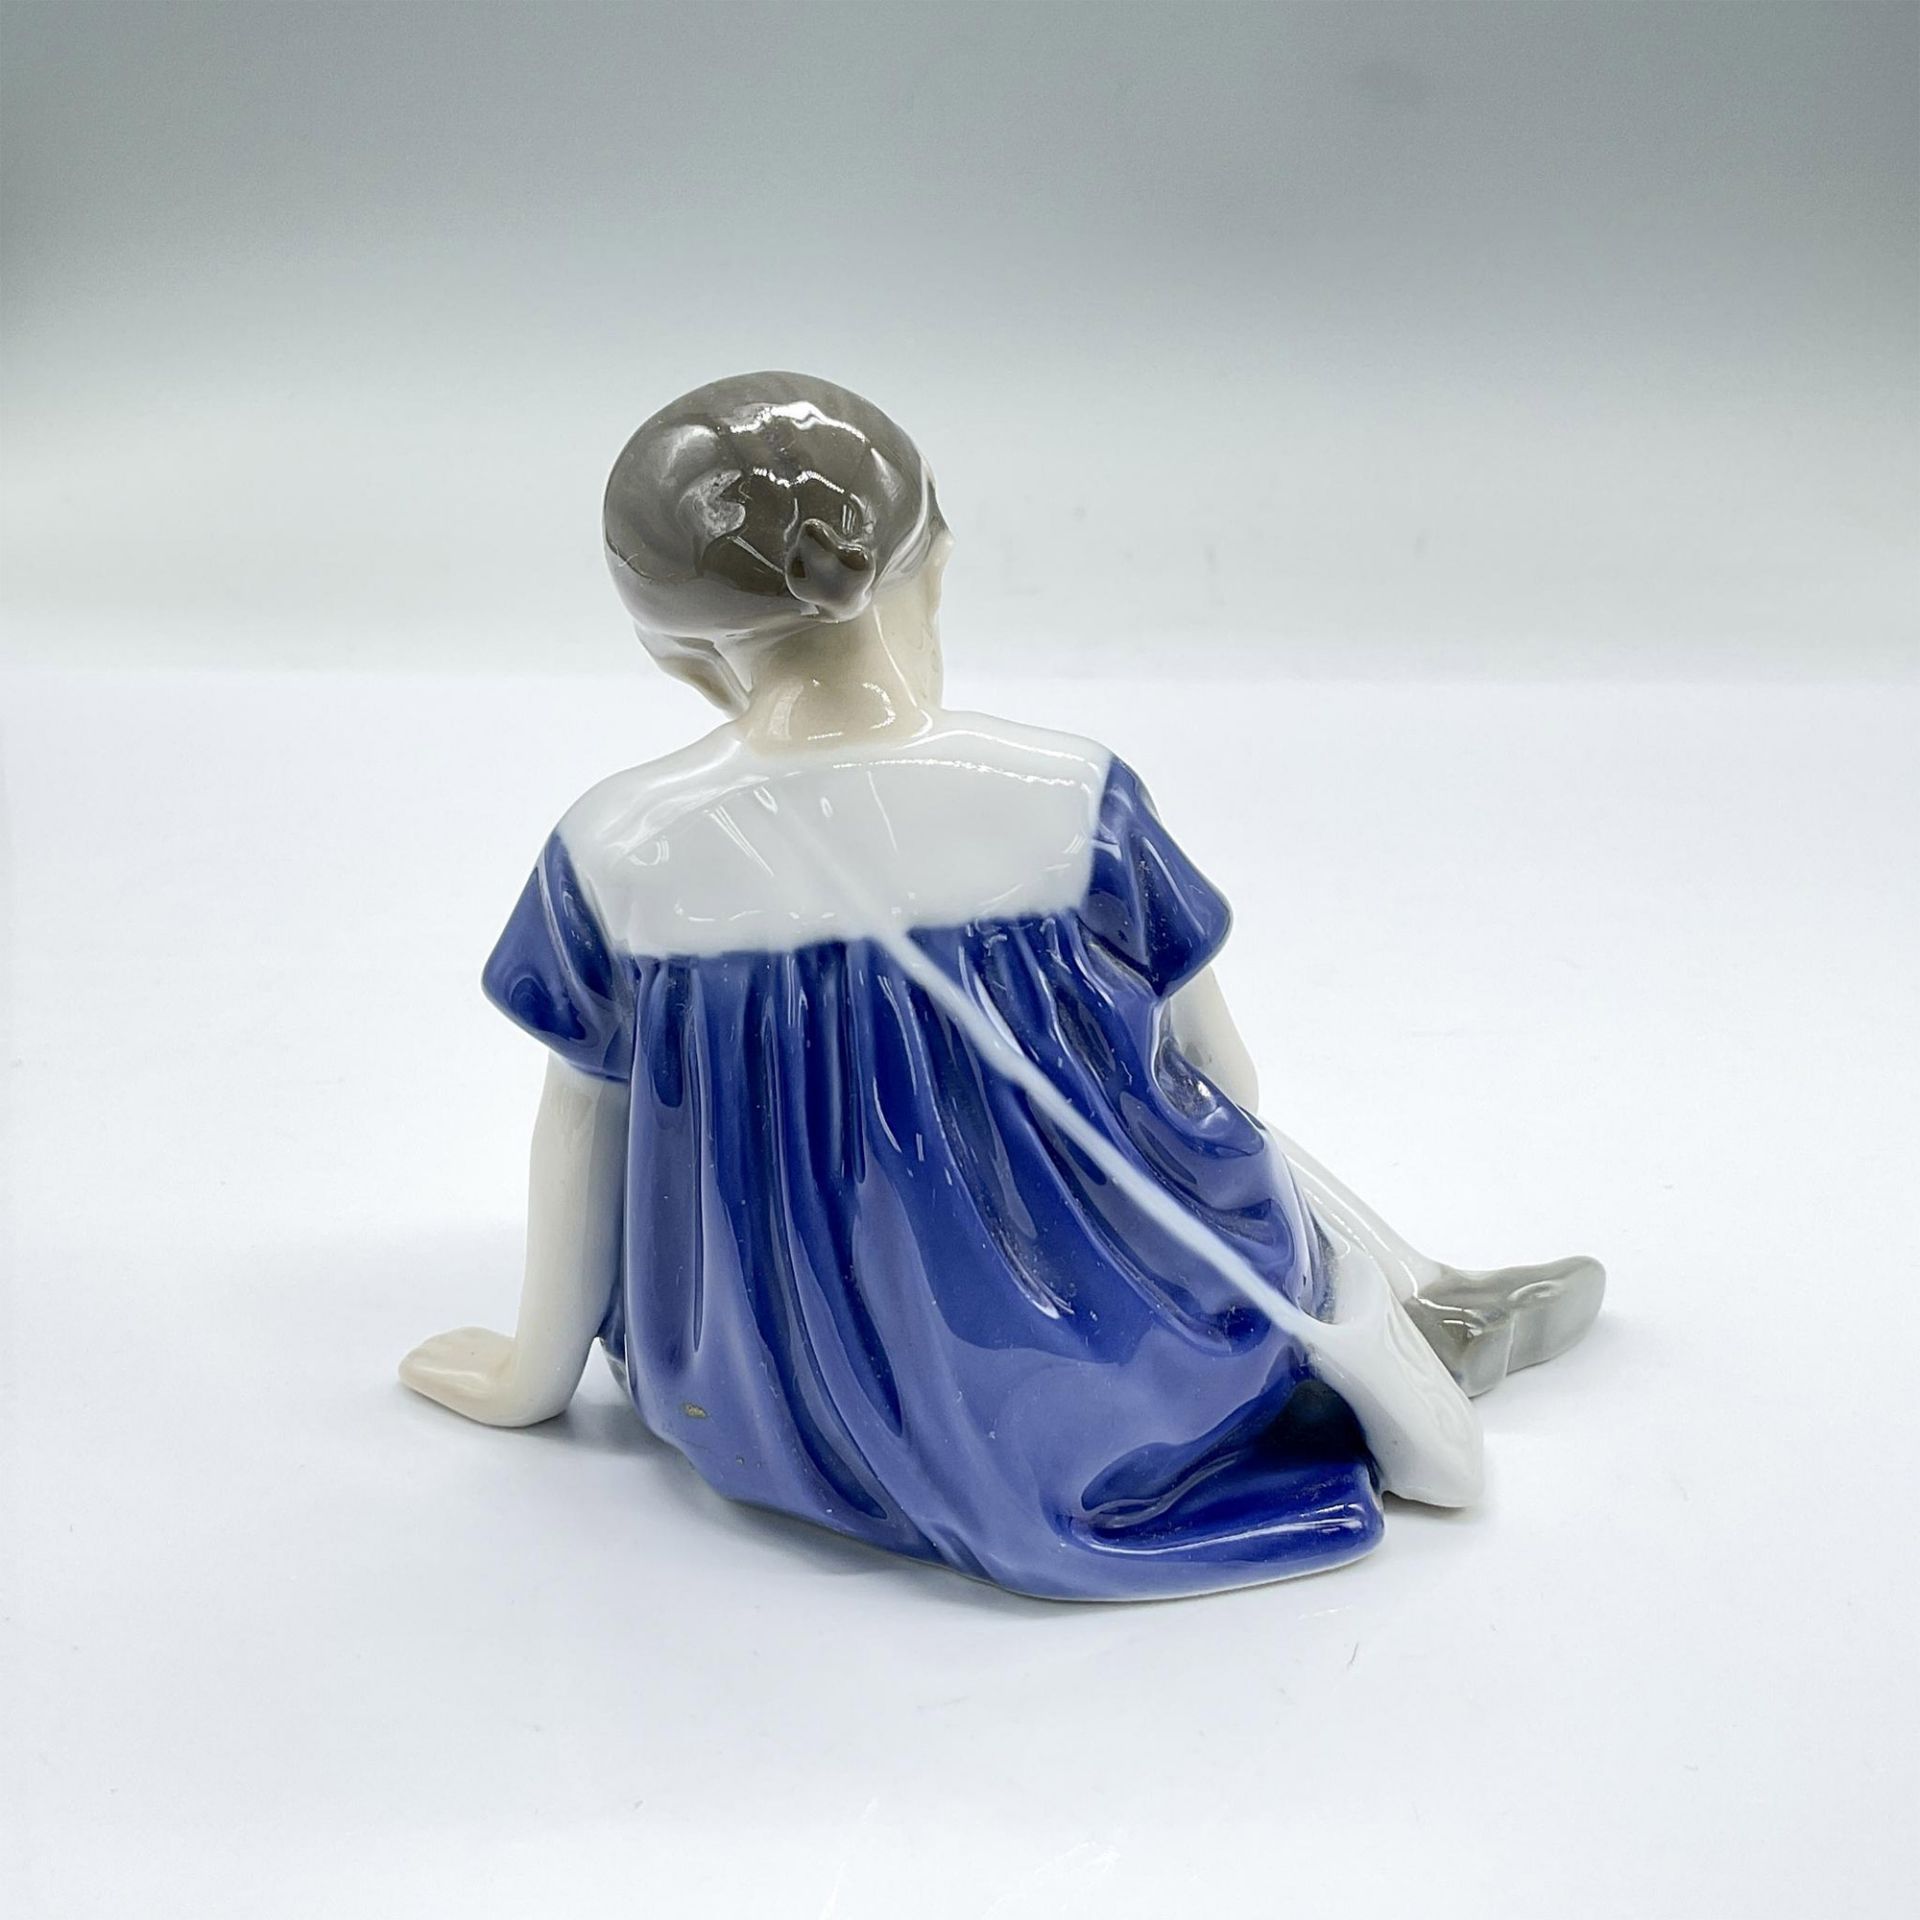 Bing & Grondahl Figurine, Girl with Doll 1526 - Image 2 of 3